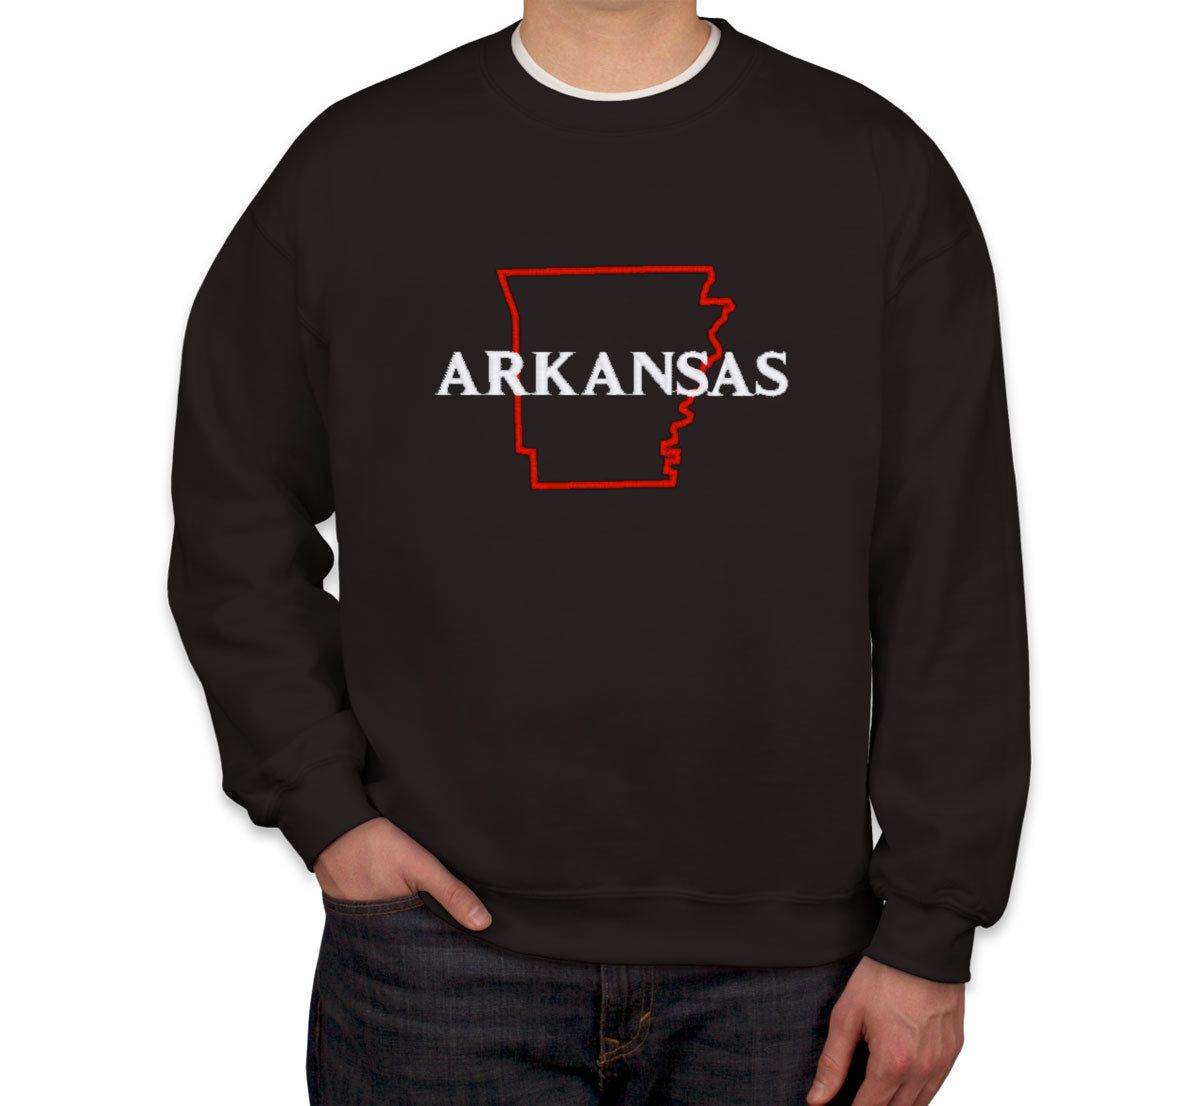 Arkansas Embroidered Unisex Sweatshirt